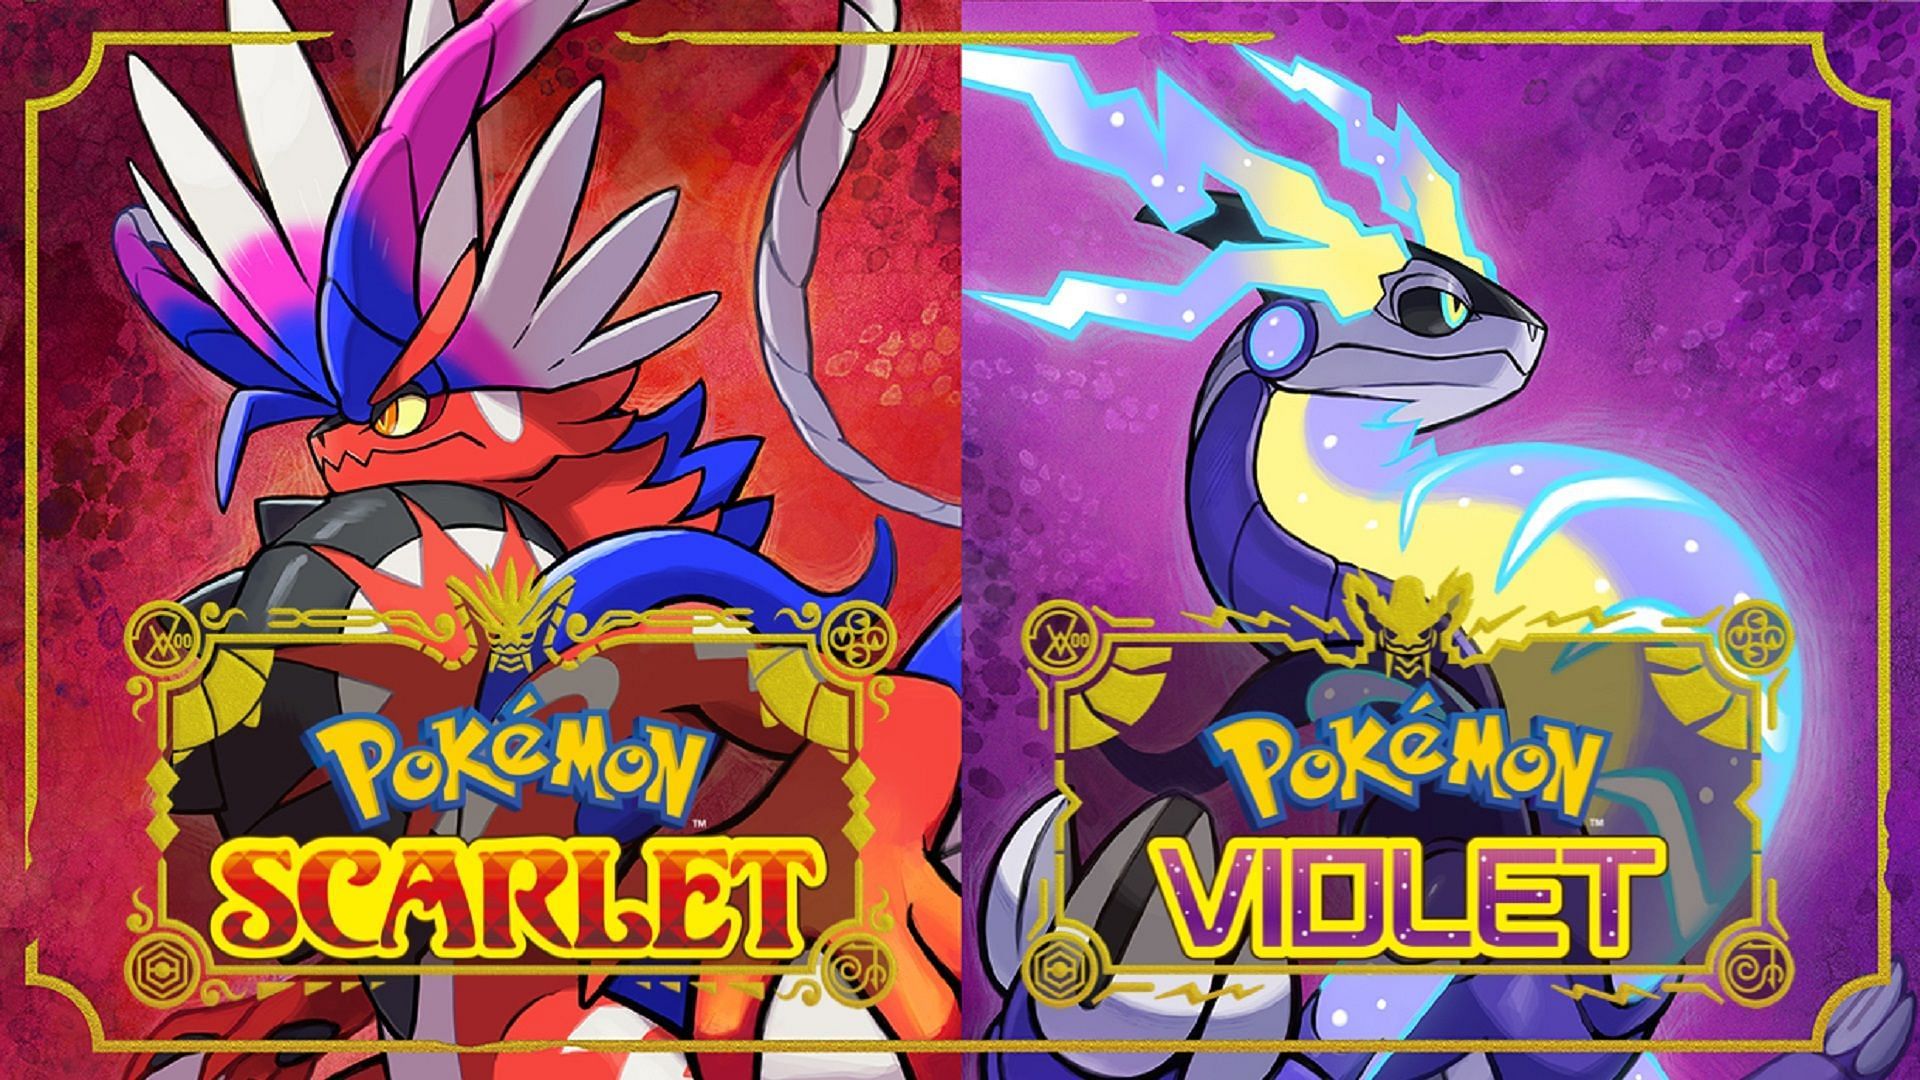 Koraidon and Miraidon, the respective mascot Pokemon for Scarlet and Violet (Image via Game Freak)